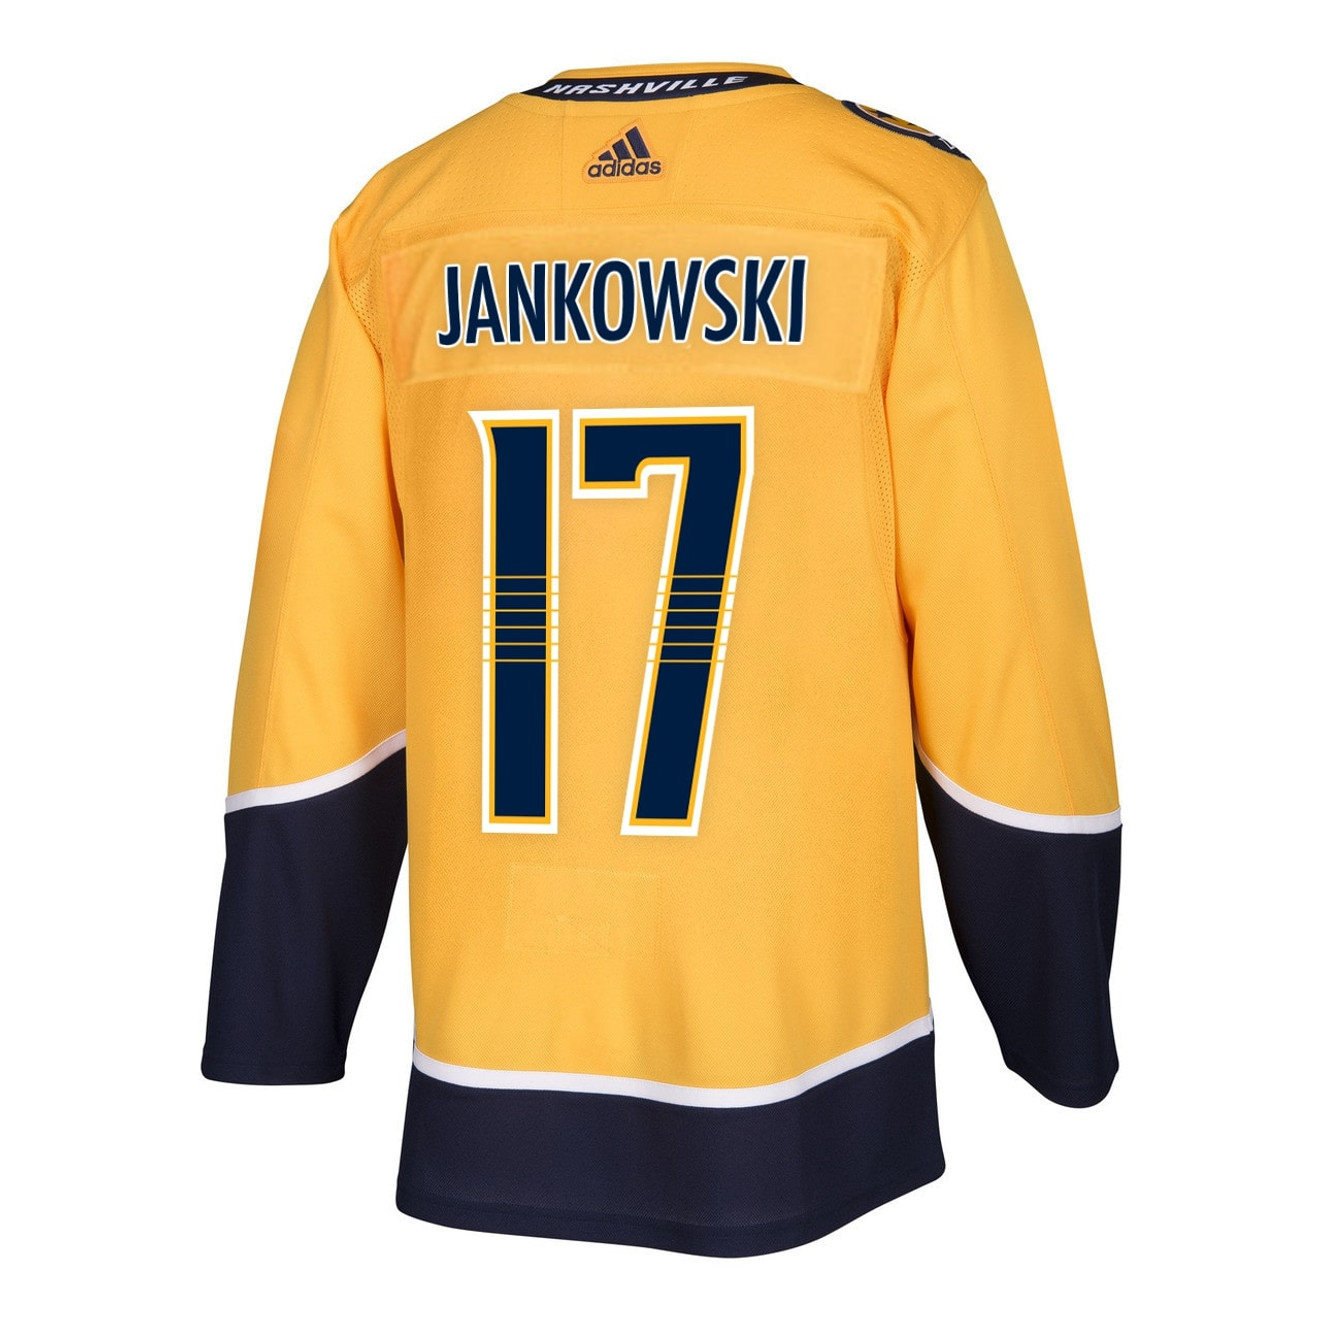 Nashville Predators Adidas Authentic Mark Jankowski Jersey Home/Gold